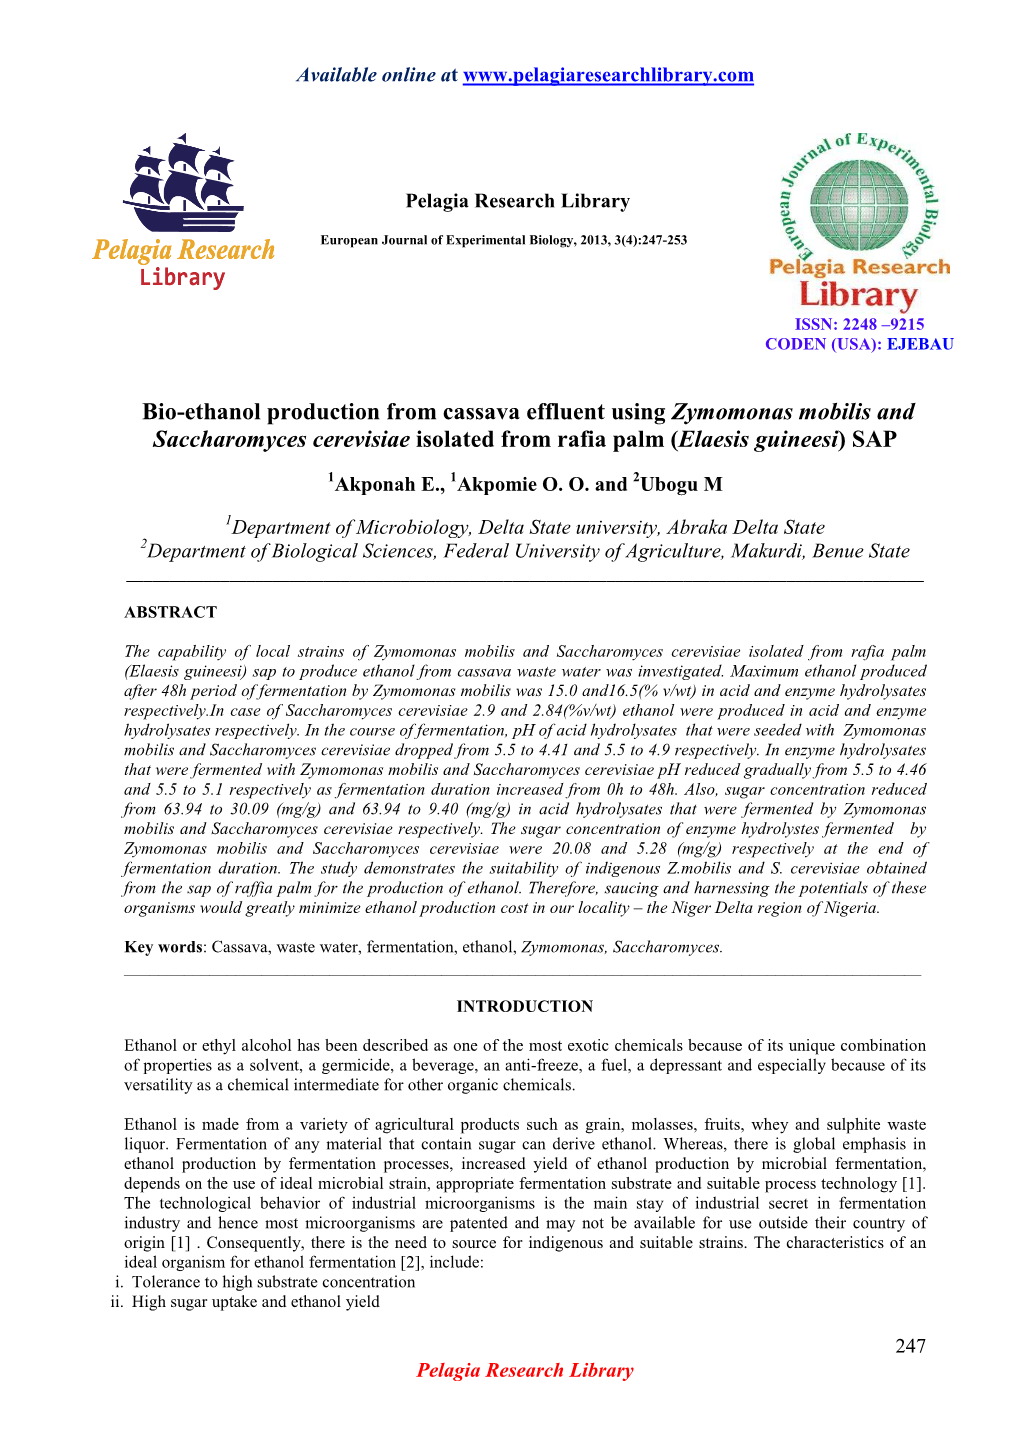 Bio-Ethanol Production from Cassava Effluent Using Zymomonas Mobilis and Saccharomyces Cerevisiae Isolated from Rafia Palm (Elaesis Guineesi ) SAP